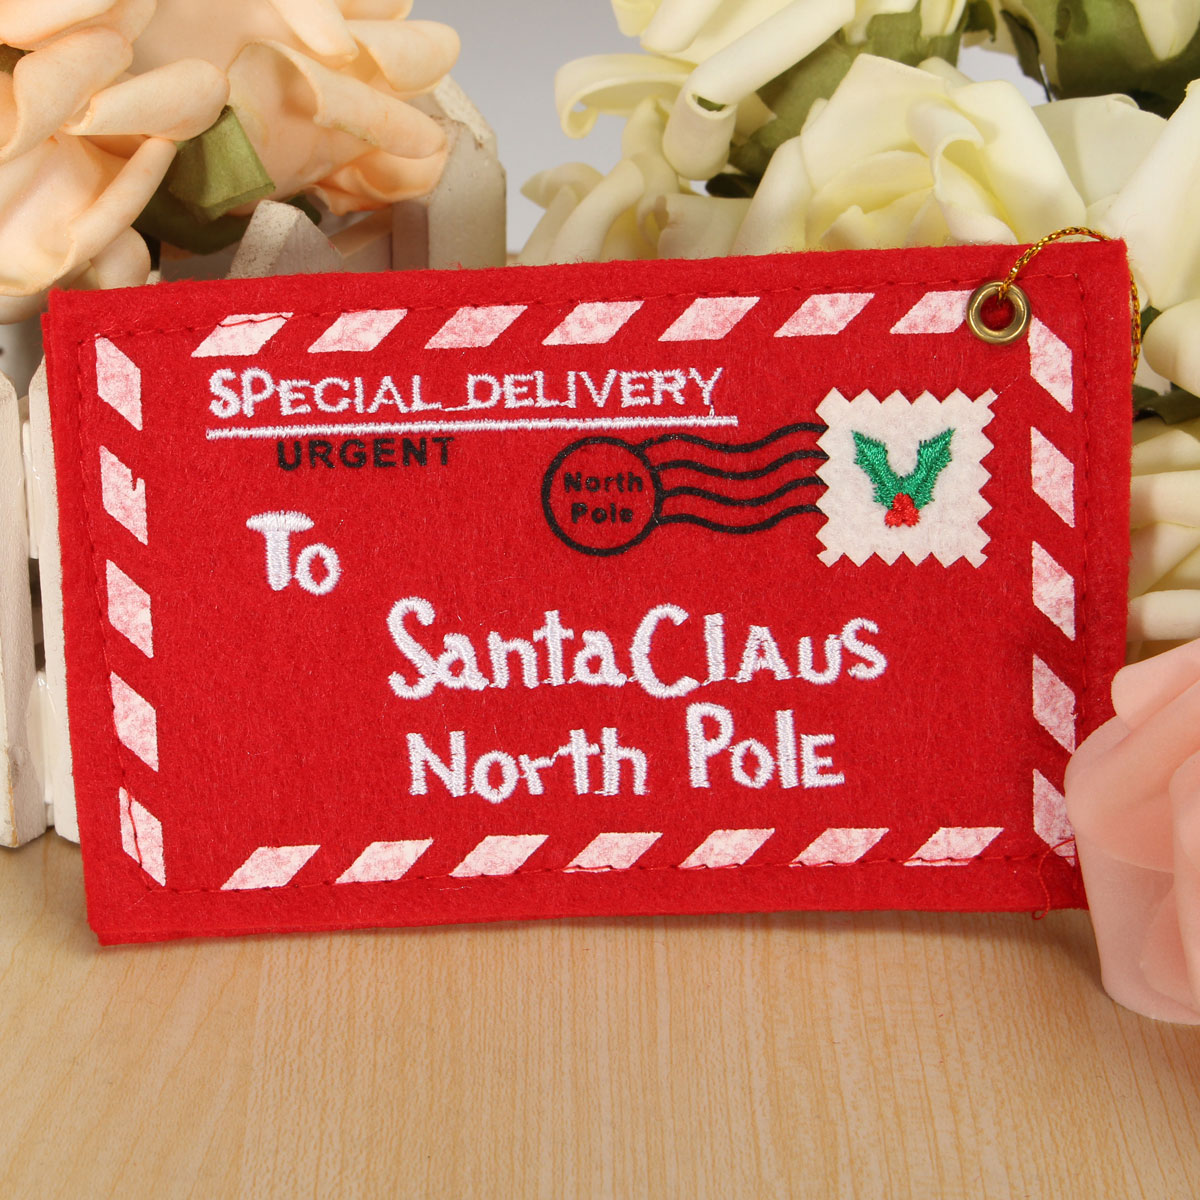 10pcs-Christmas-Santa-Wishing-Letter-Envelopes-Red-Felt-Embroidered-Christmas-Tree-Decor-1008665